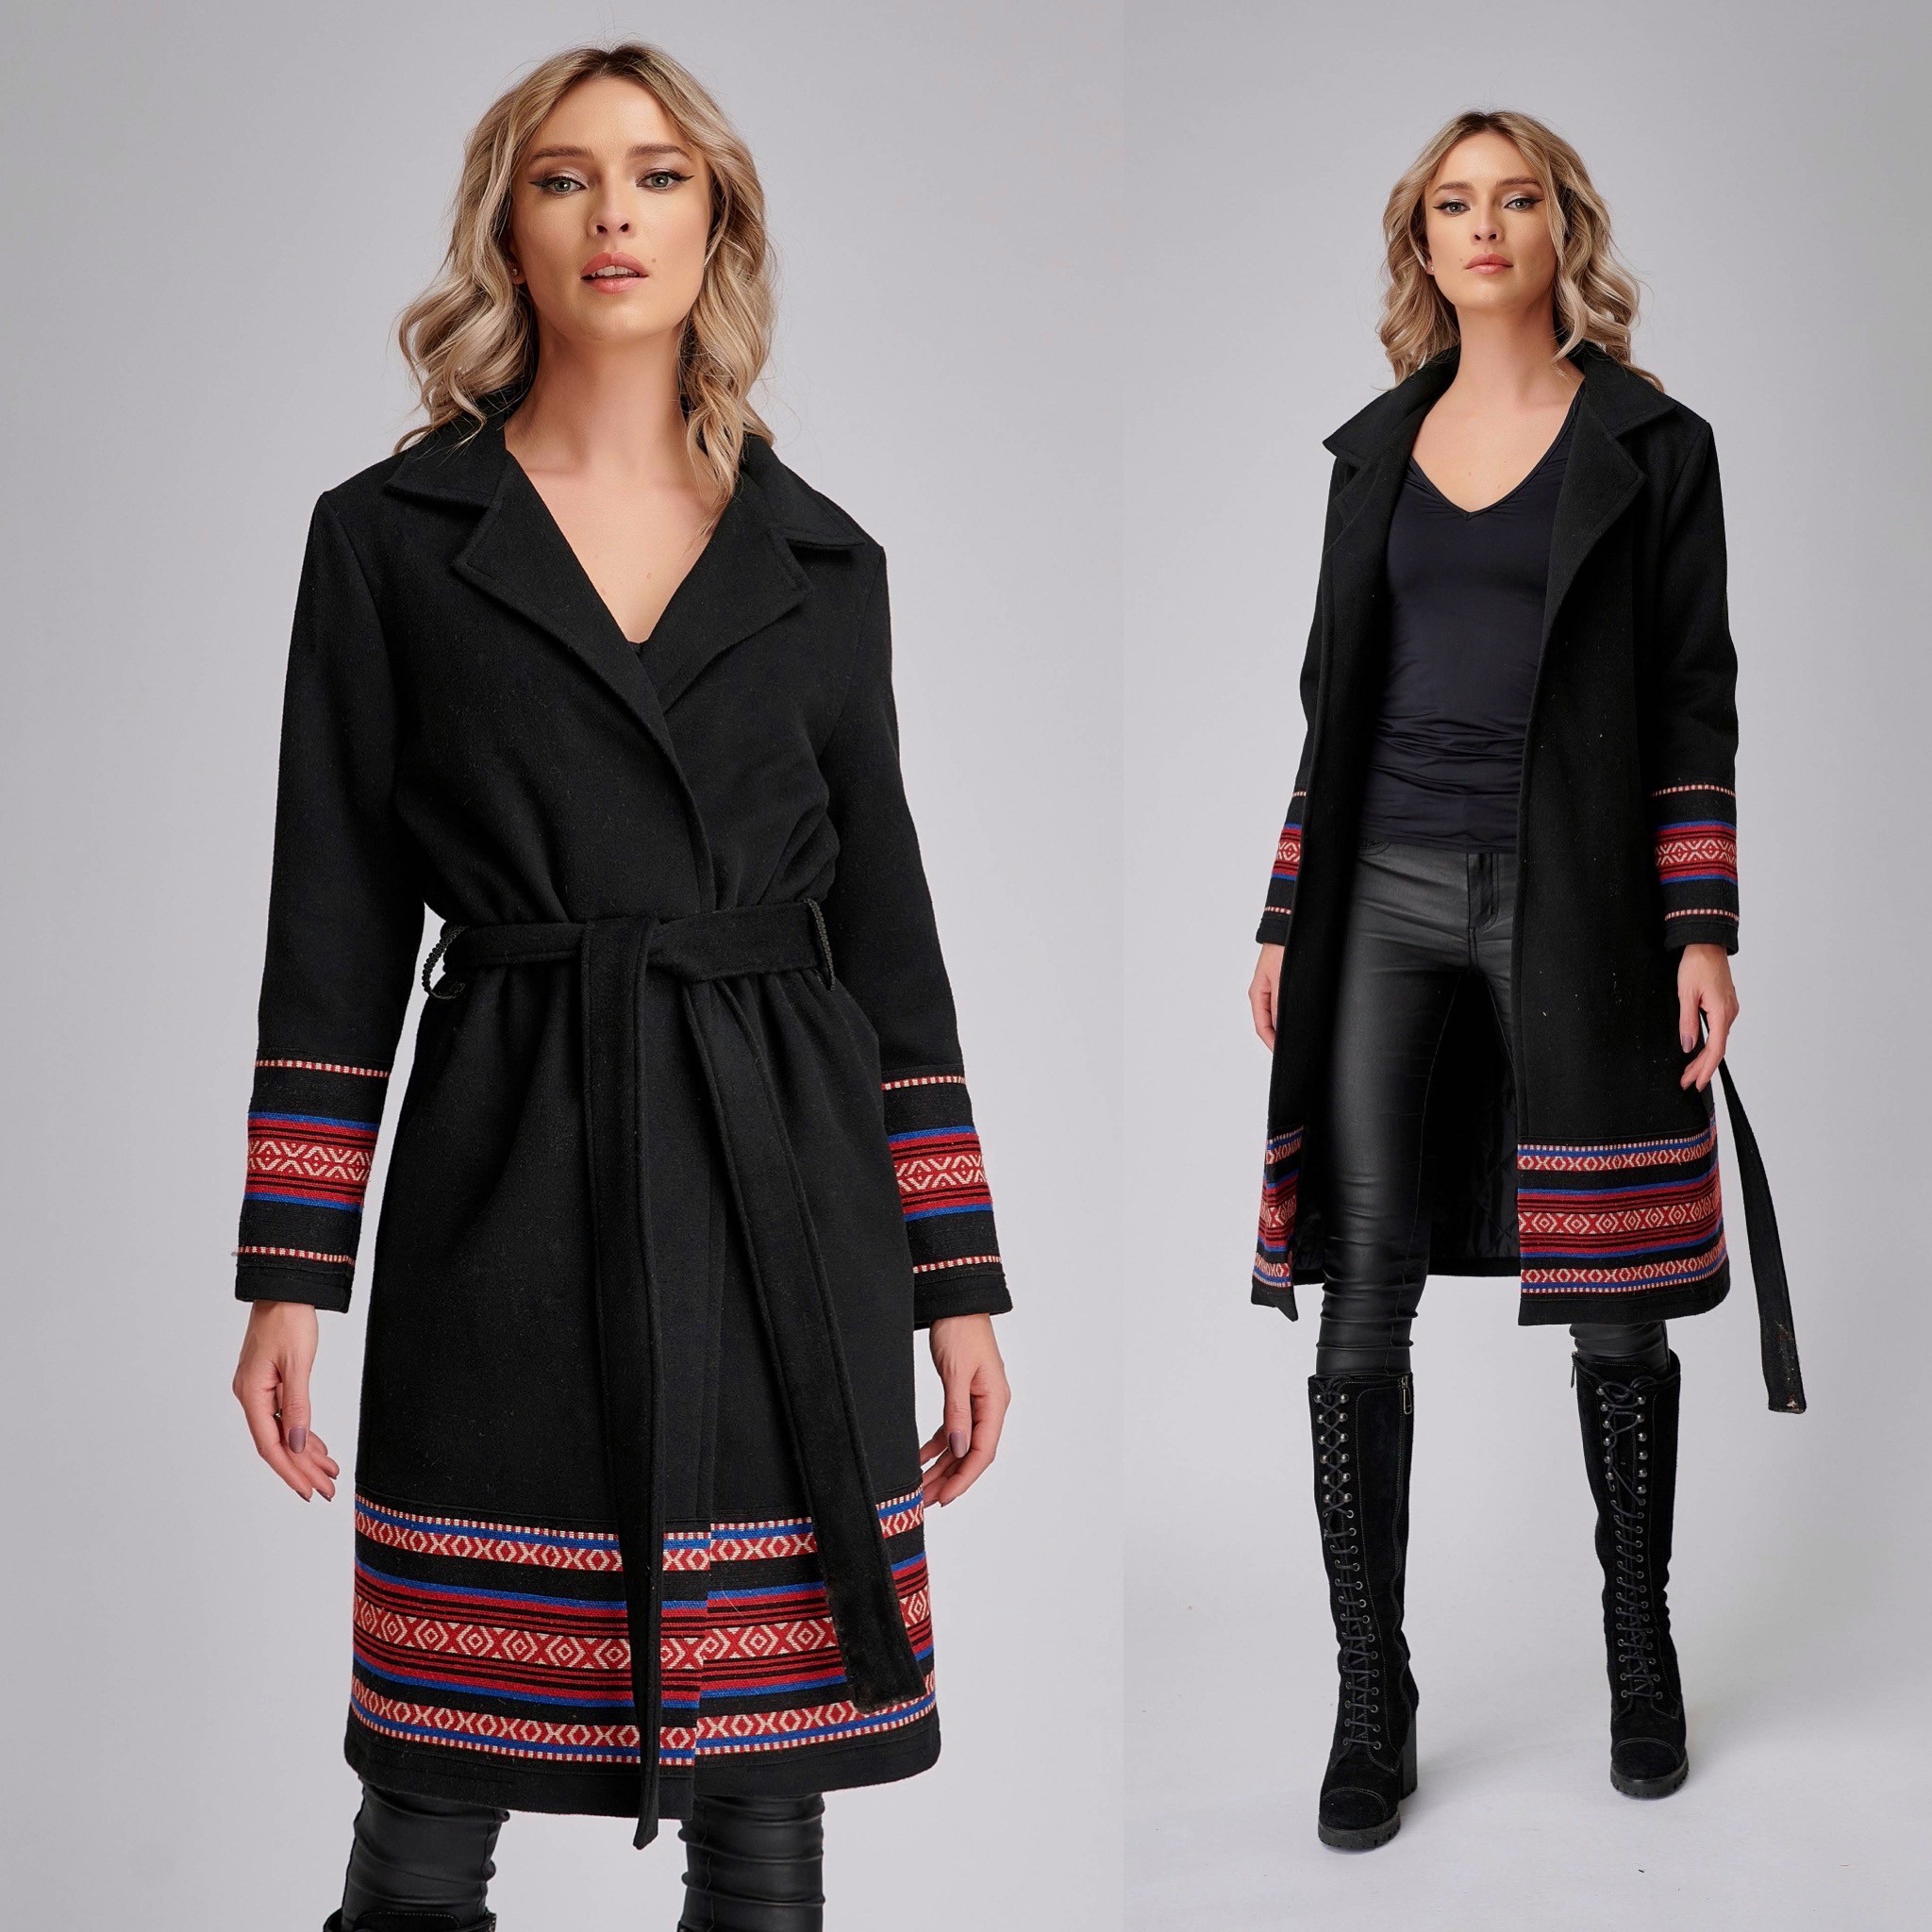 Palton National negru cu model traditional tesut